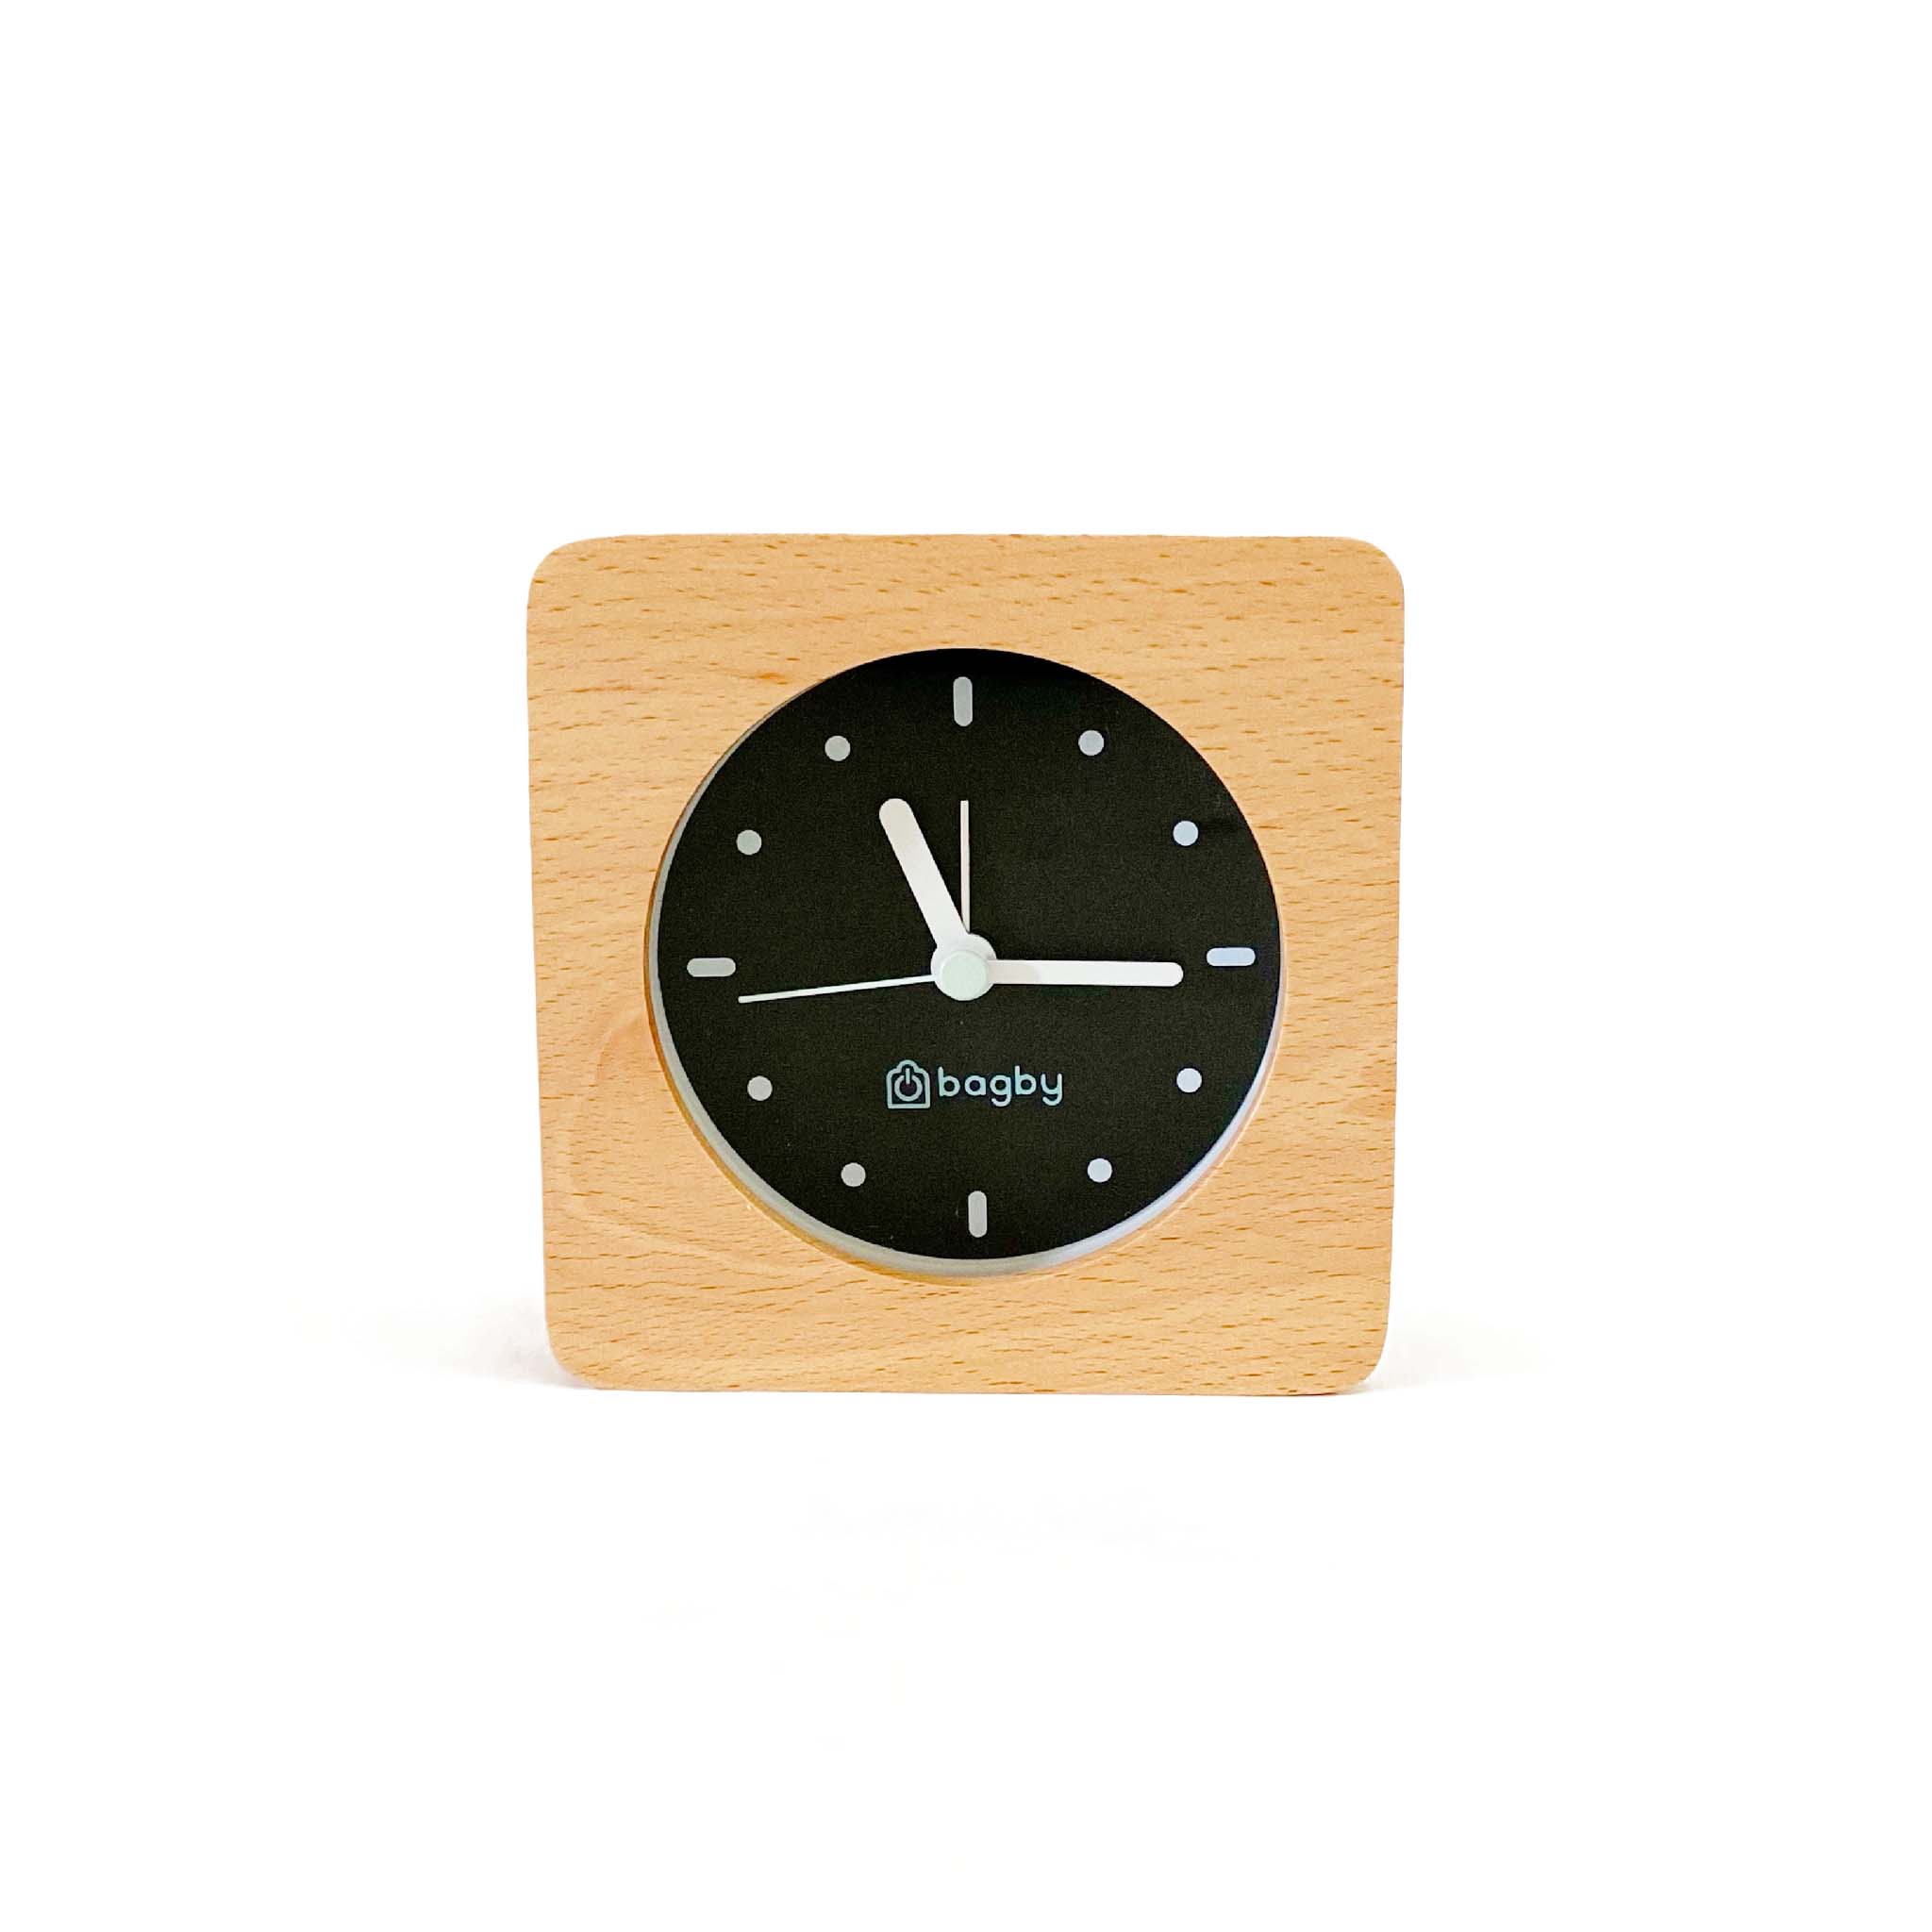 Bagby Minimalist Silent Digital-Free Alarm Clock Natural